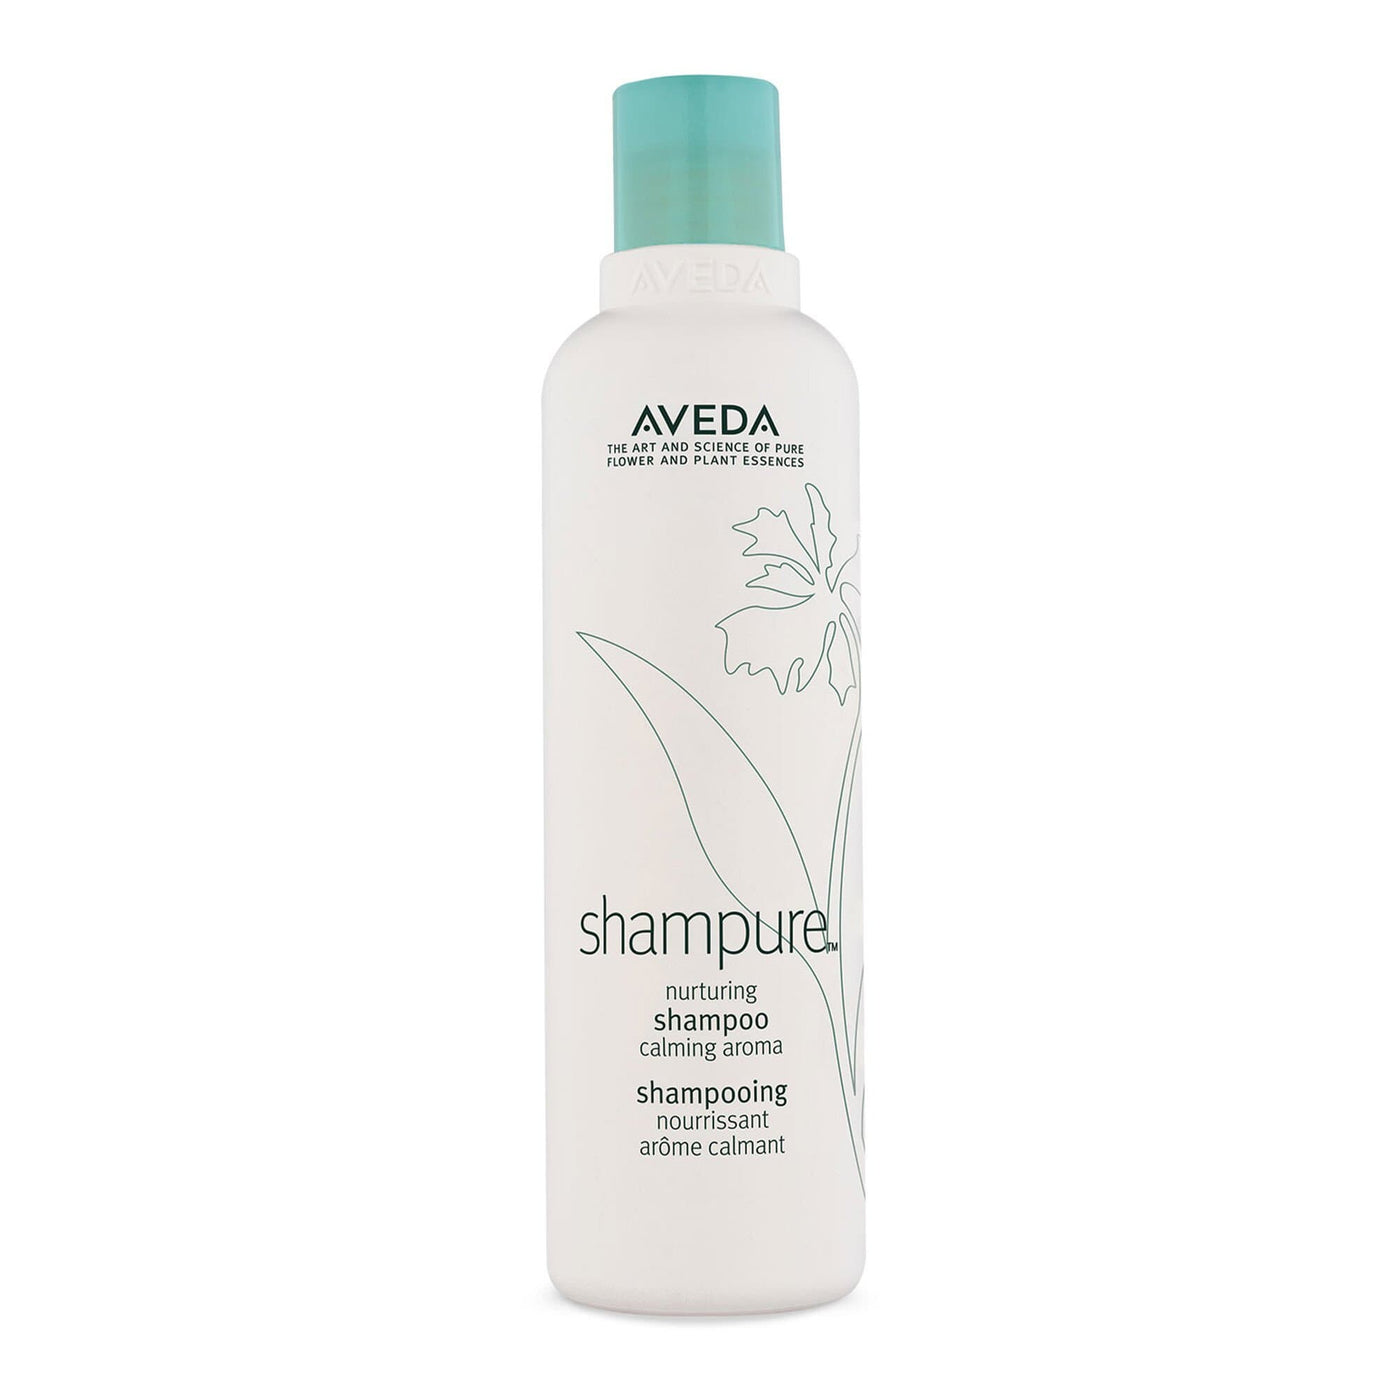 Aveda Shampoo Shampure nurturing shampoo 250ml